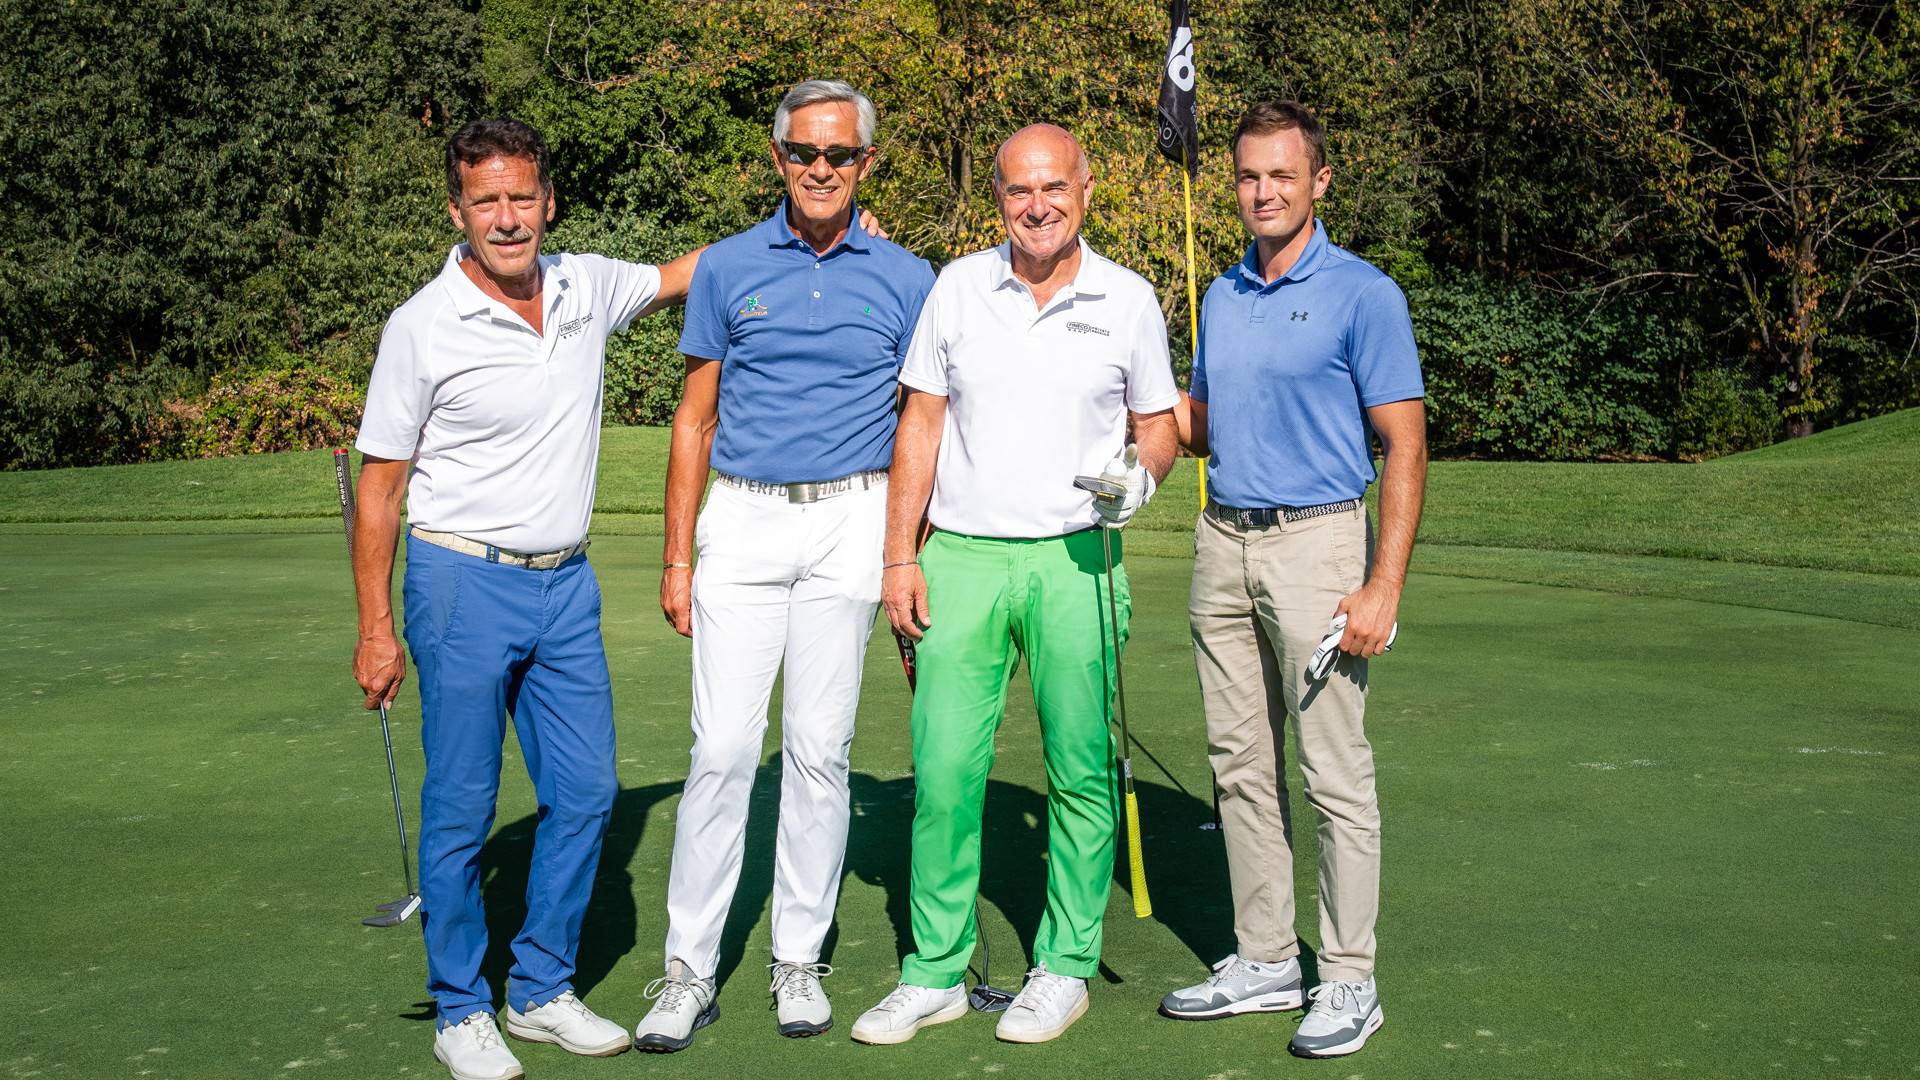 Finecobank<br> Golf Club Verona Event